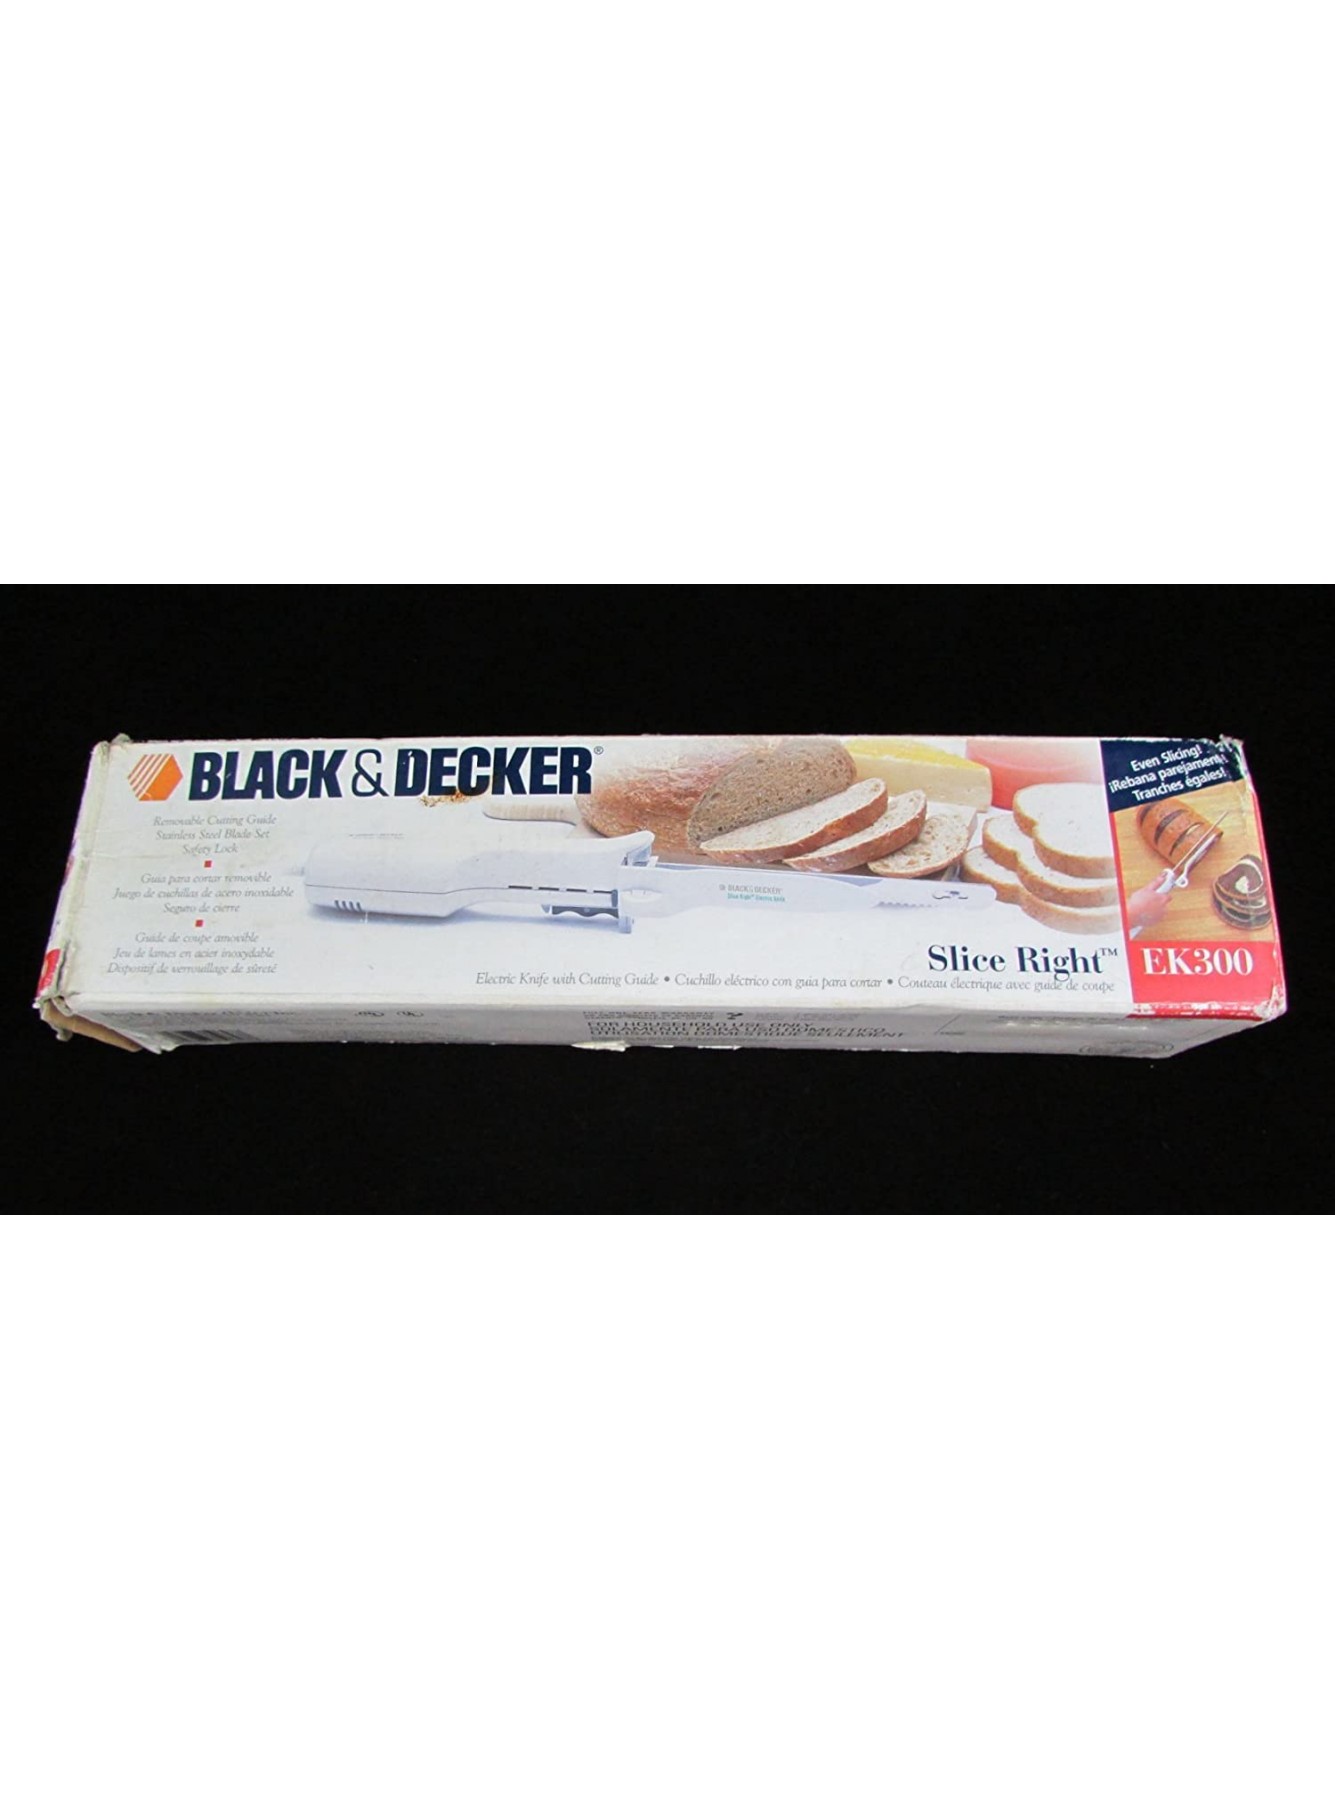 Black & Decker Electric Knife EK300 Slice Right With Box B00VIHVWZ6